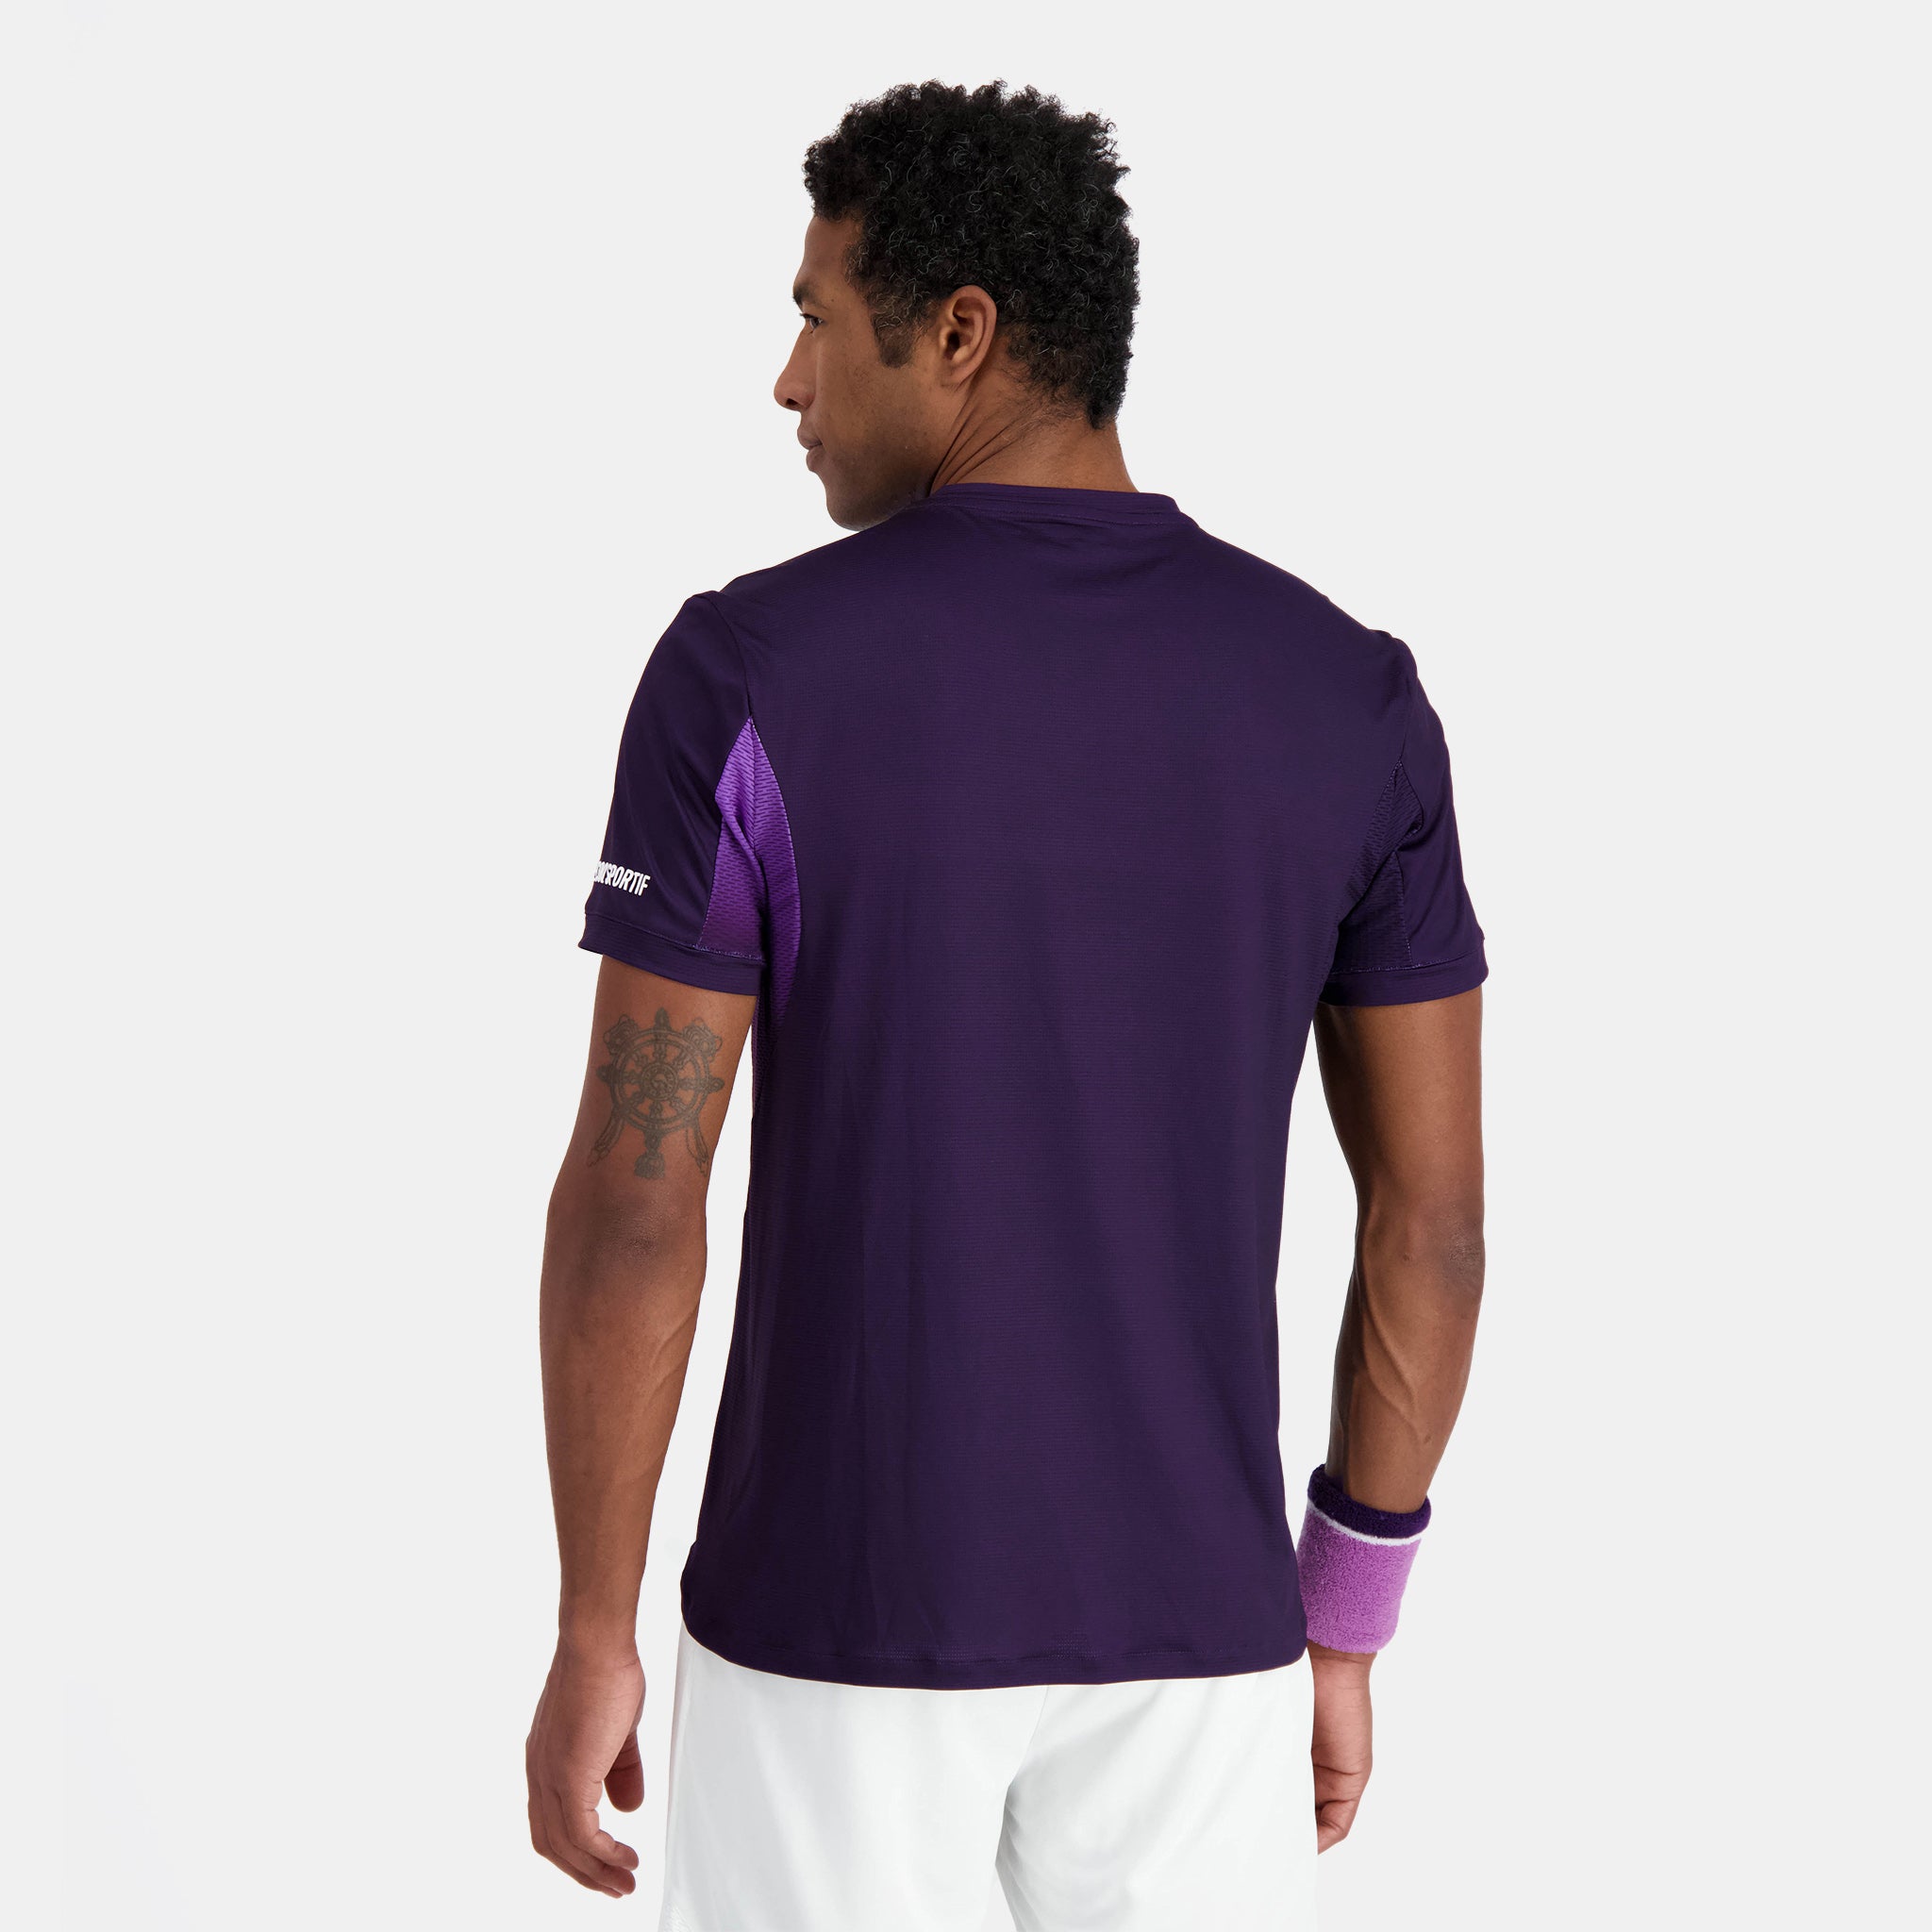 2410516-TENNIS PRO Tee SS 24 N°1 M purple velvet  | Camiseta Hombre